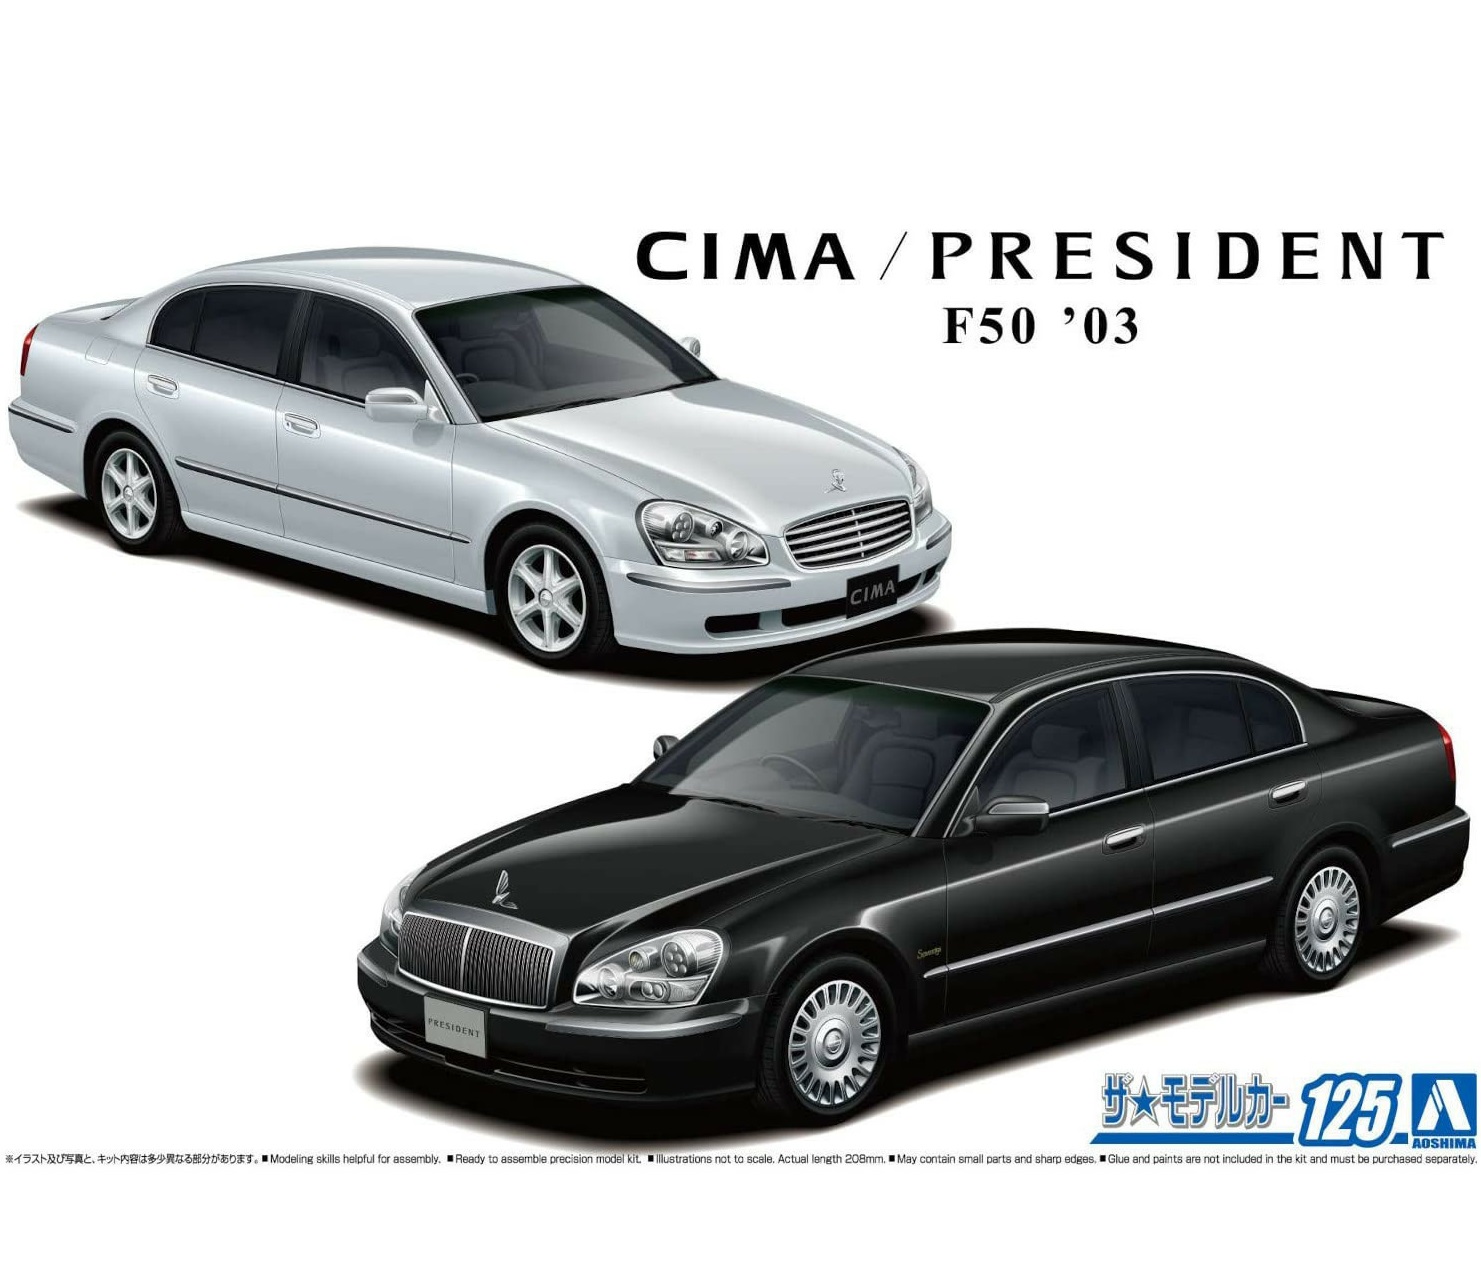 06142  автомобили и мотоциклы  Nissan F50 Cima/President '03  (1:24)